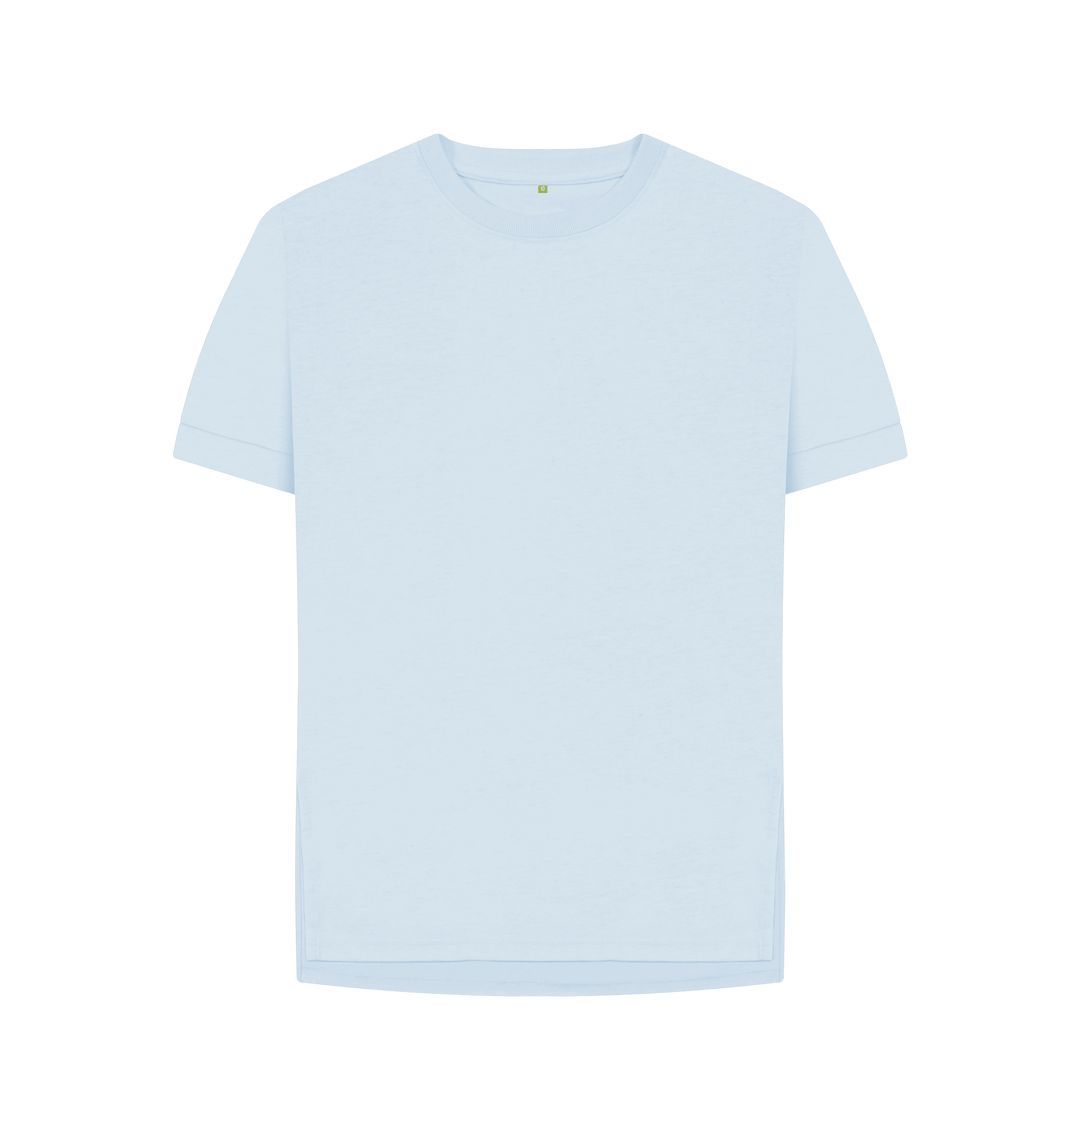 Sky Blue Women's organic cotton relaxed fit t-shirt